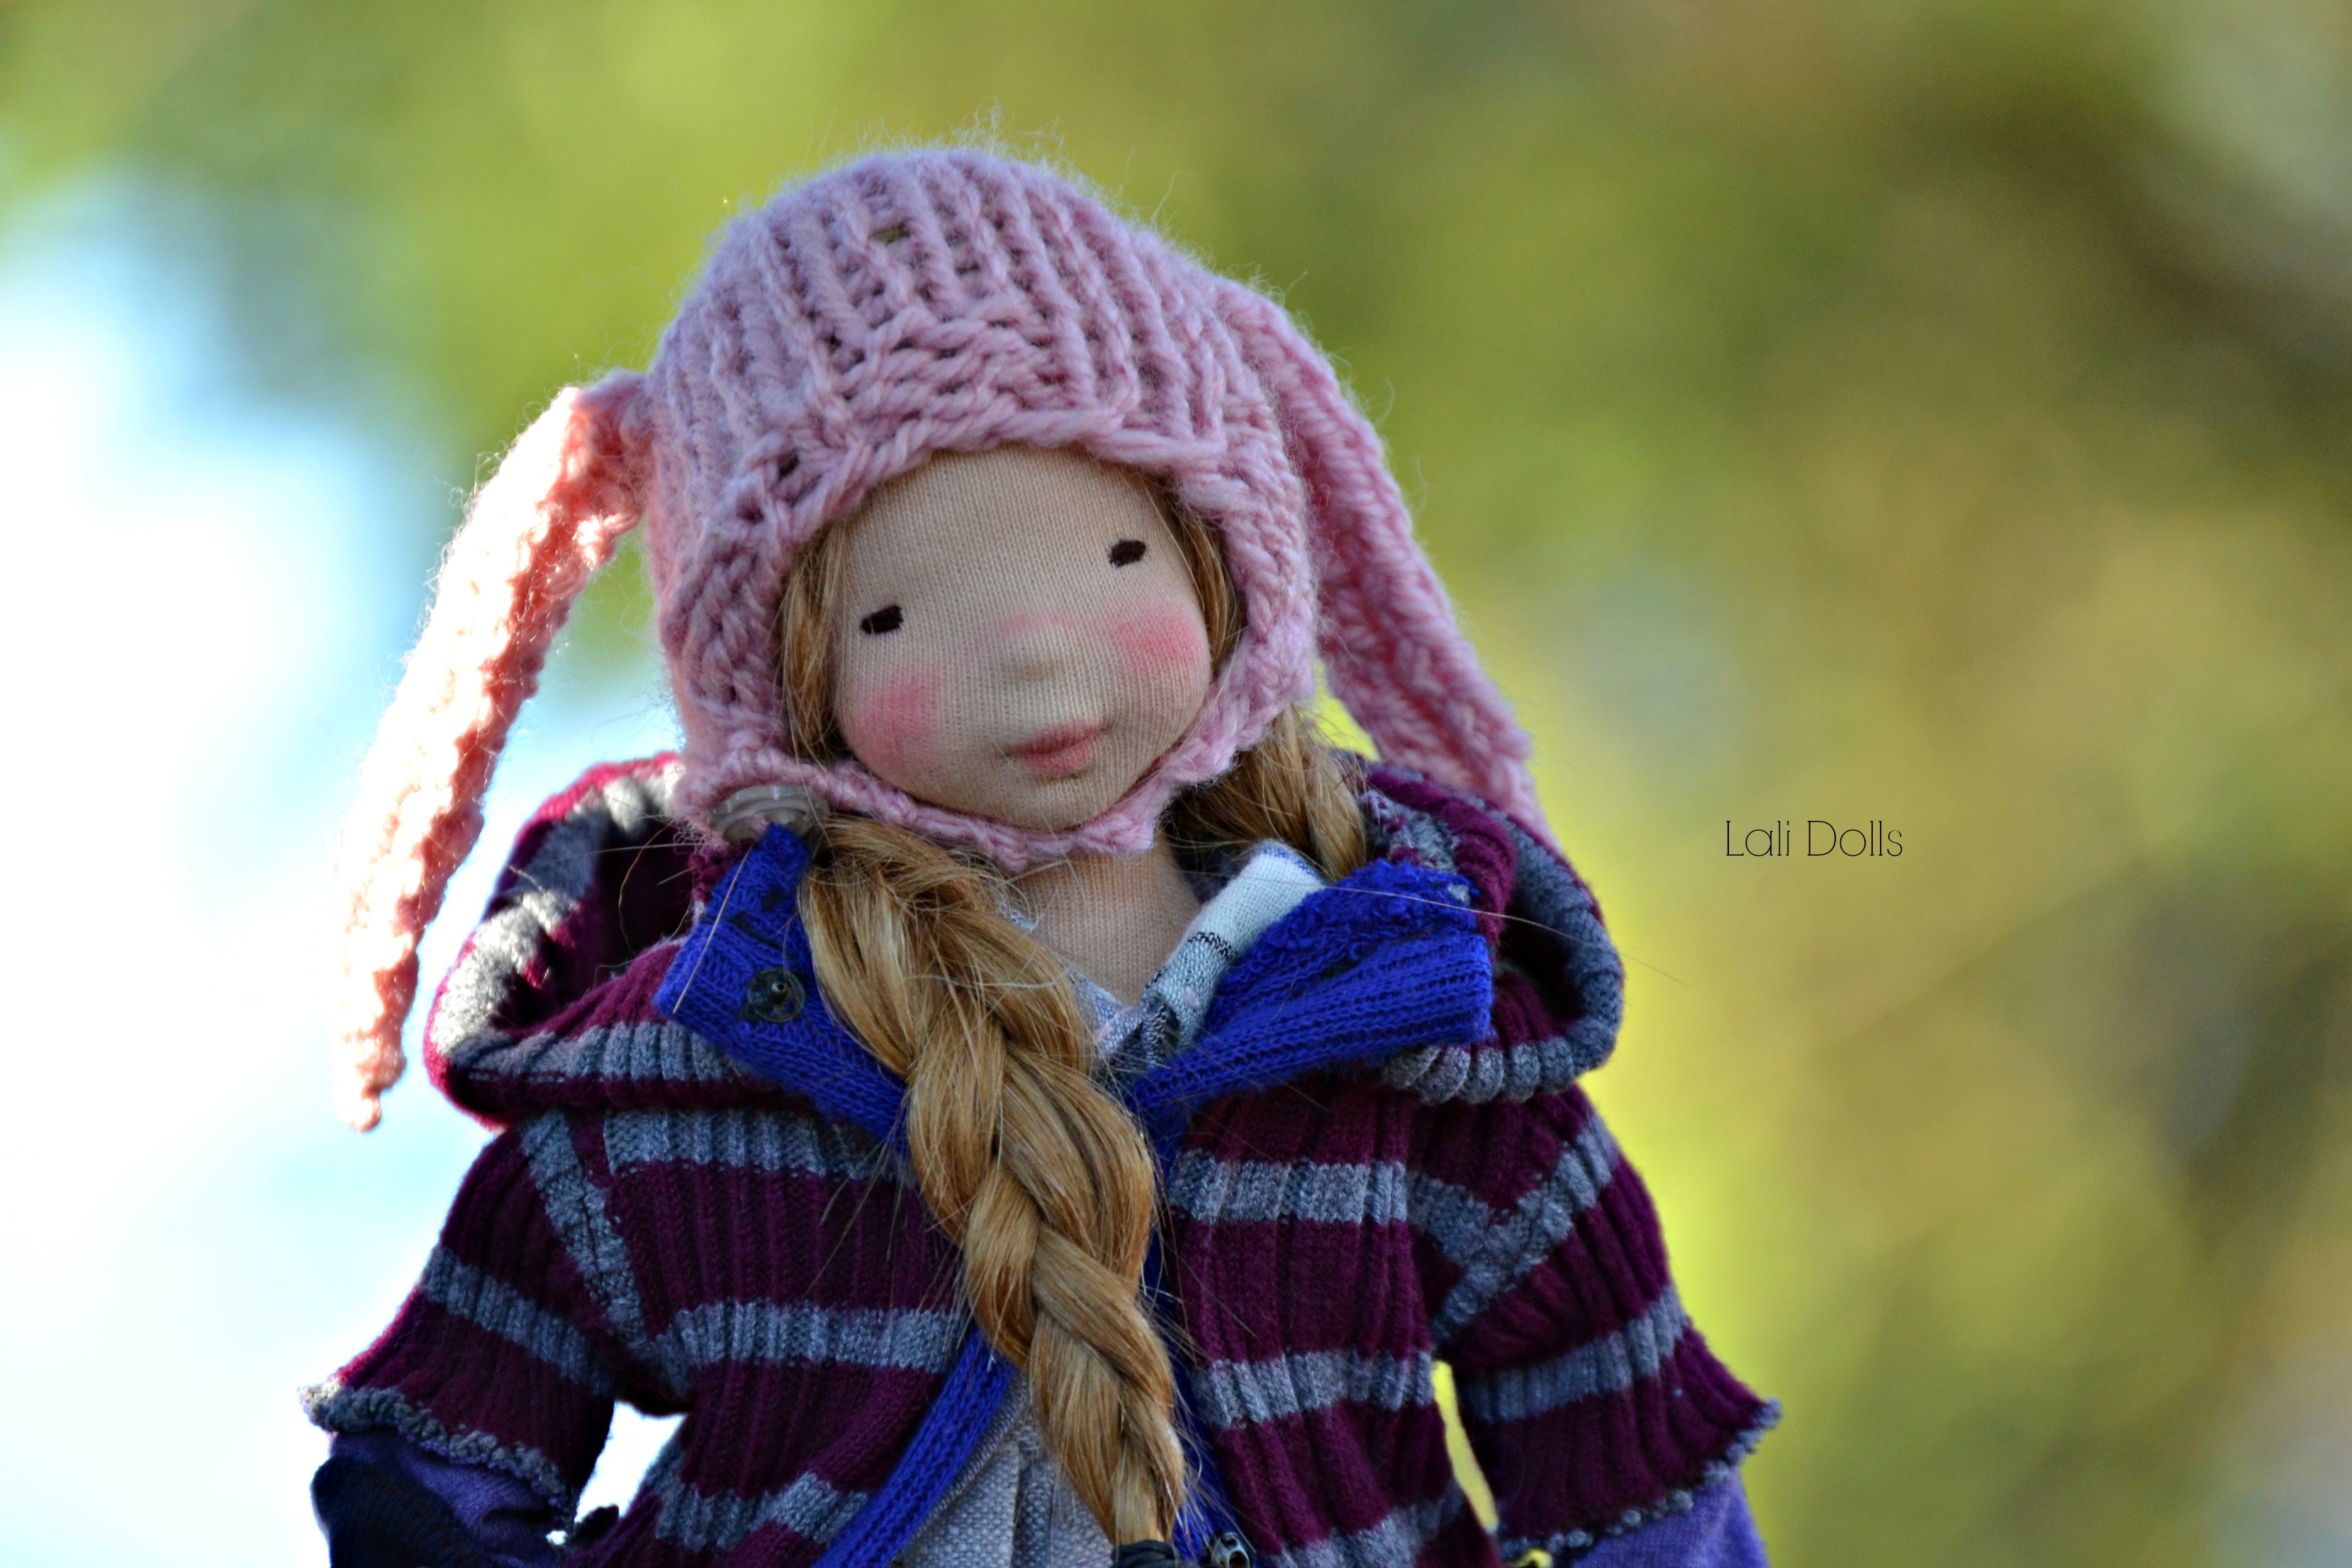 Dayle 12" natural fiber art doll